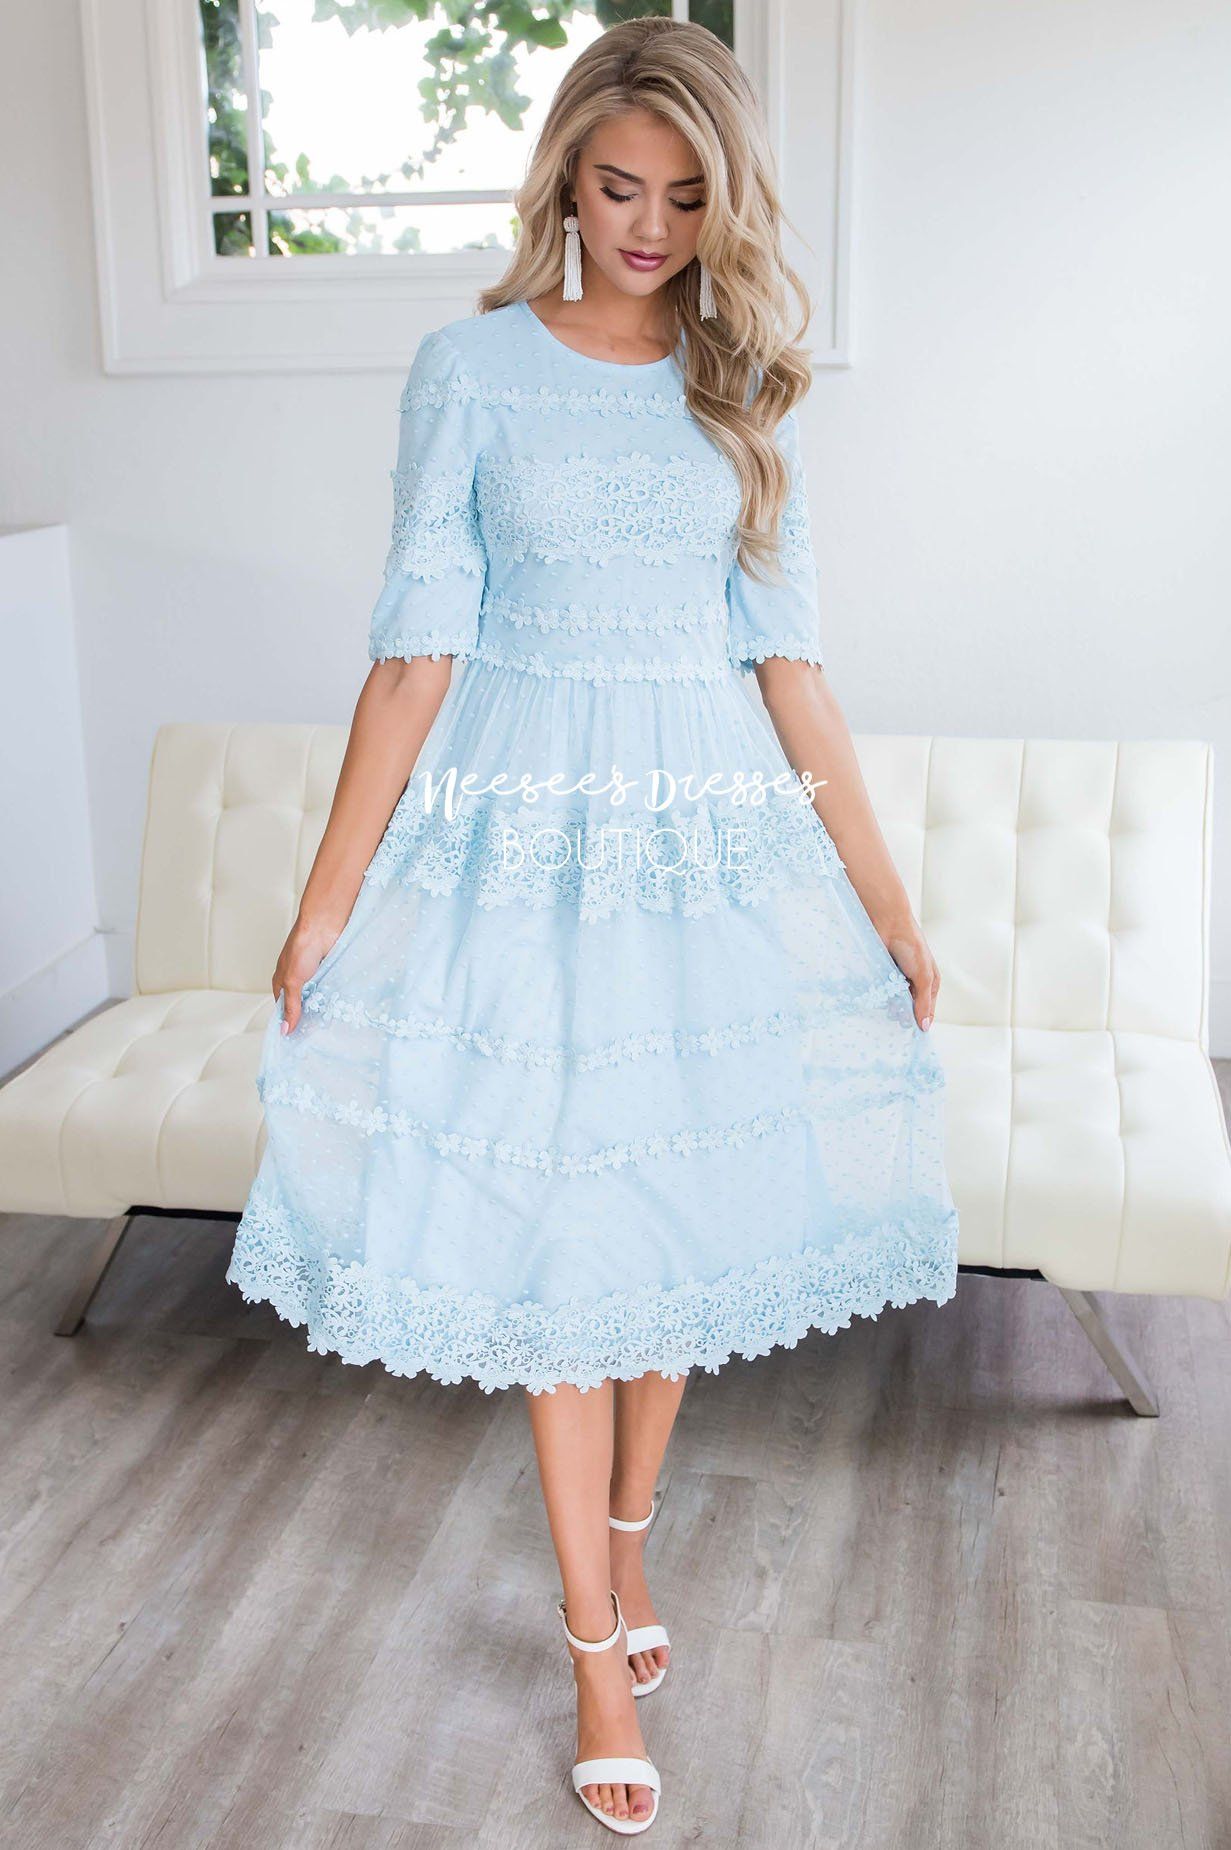 light blue modest bridesmaid dresses